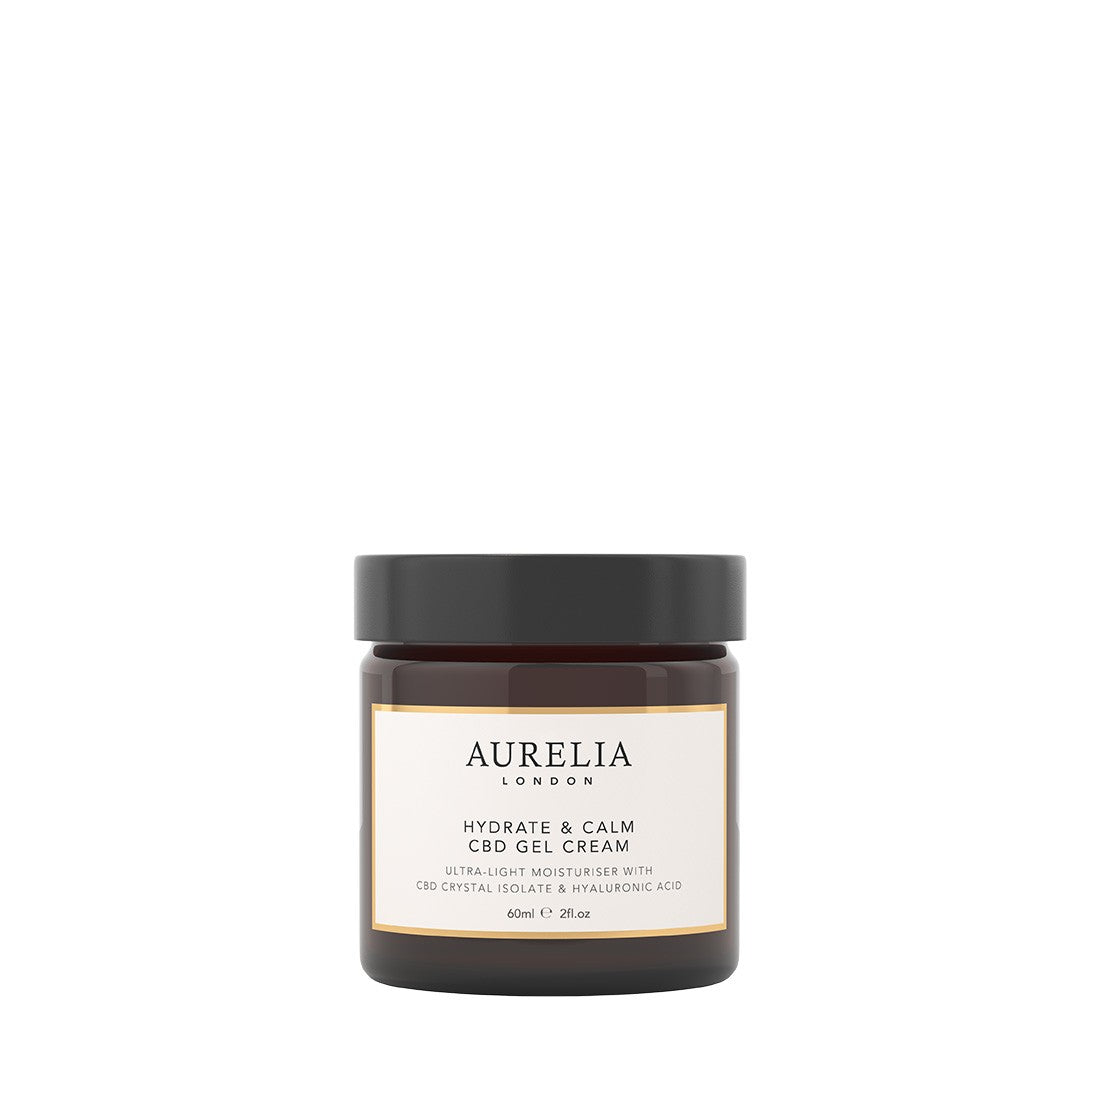 Aurelia London Hydrate and Calm CBD Gel Cream - 60ml